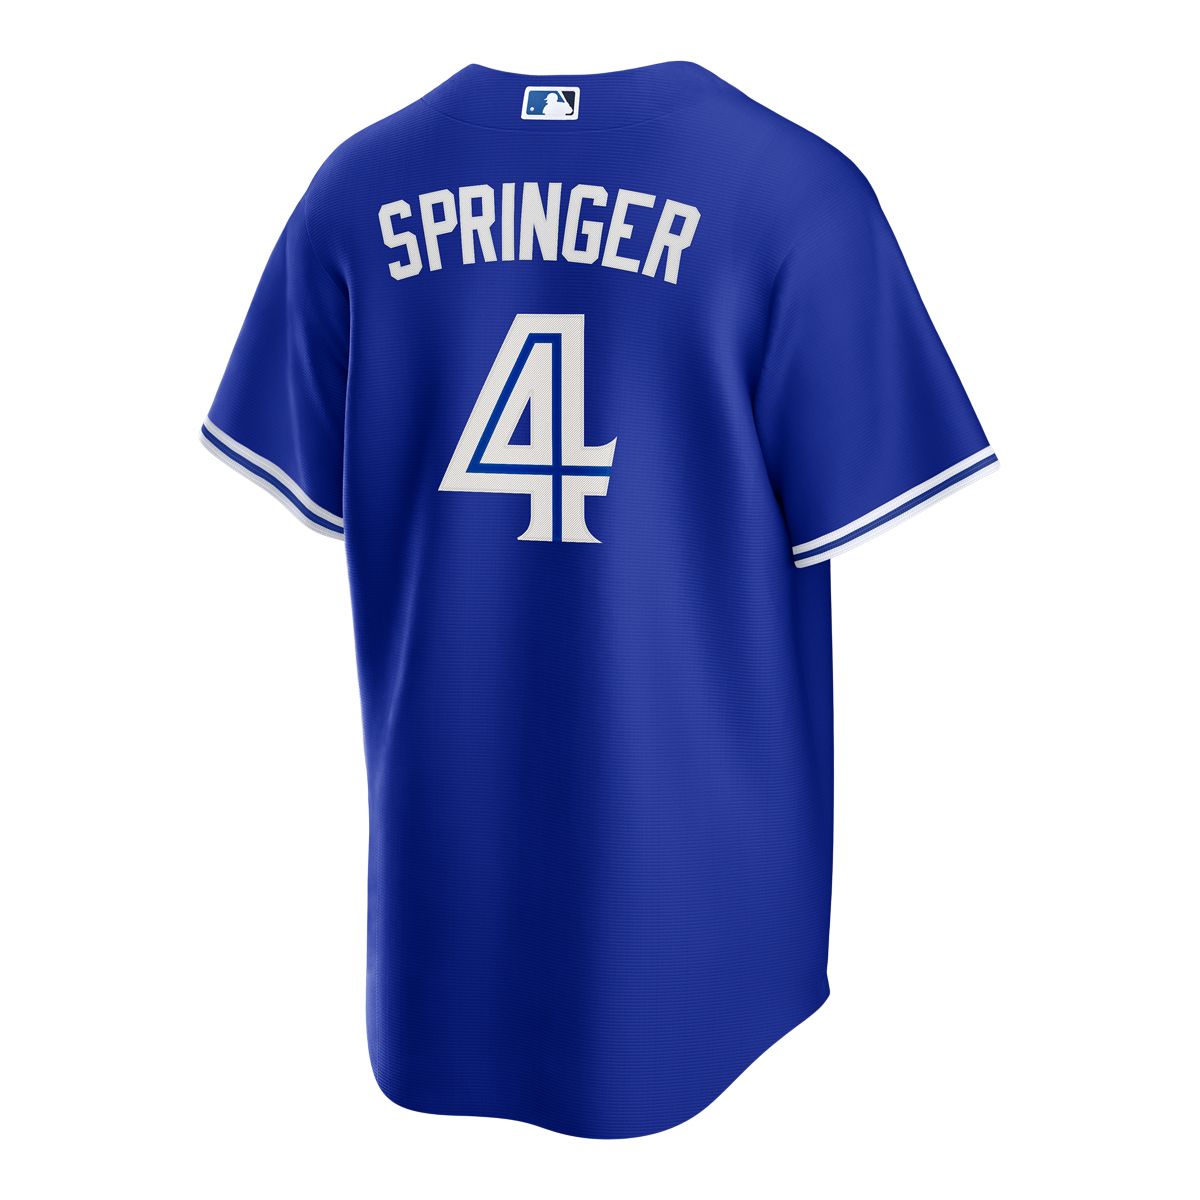 Police Auctions Canada - Men's Nike Toronto Blue Jays George Springer  Baseball Jersey - Size M (514002L)